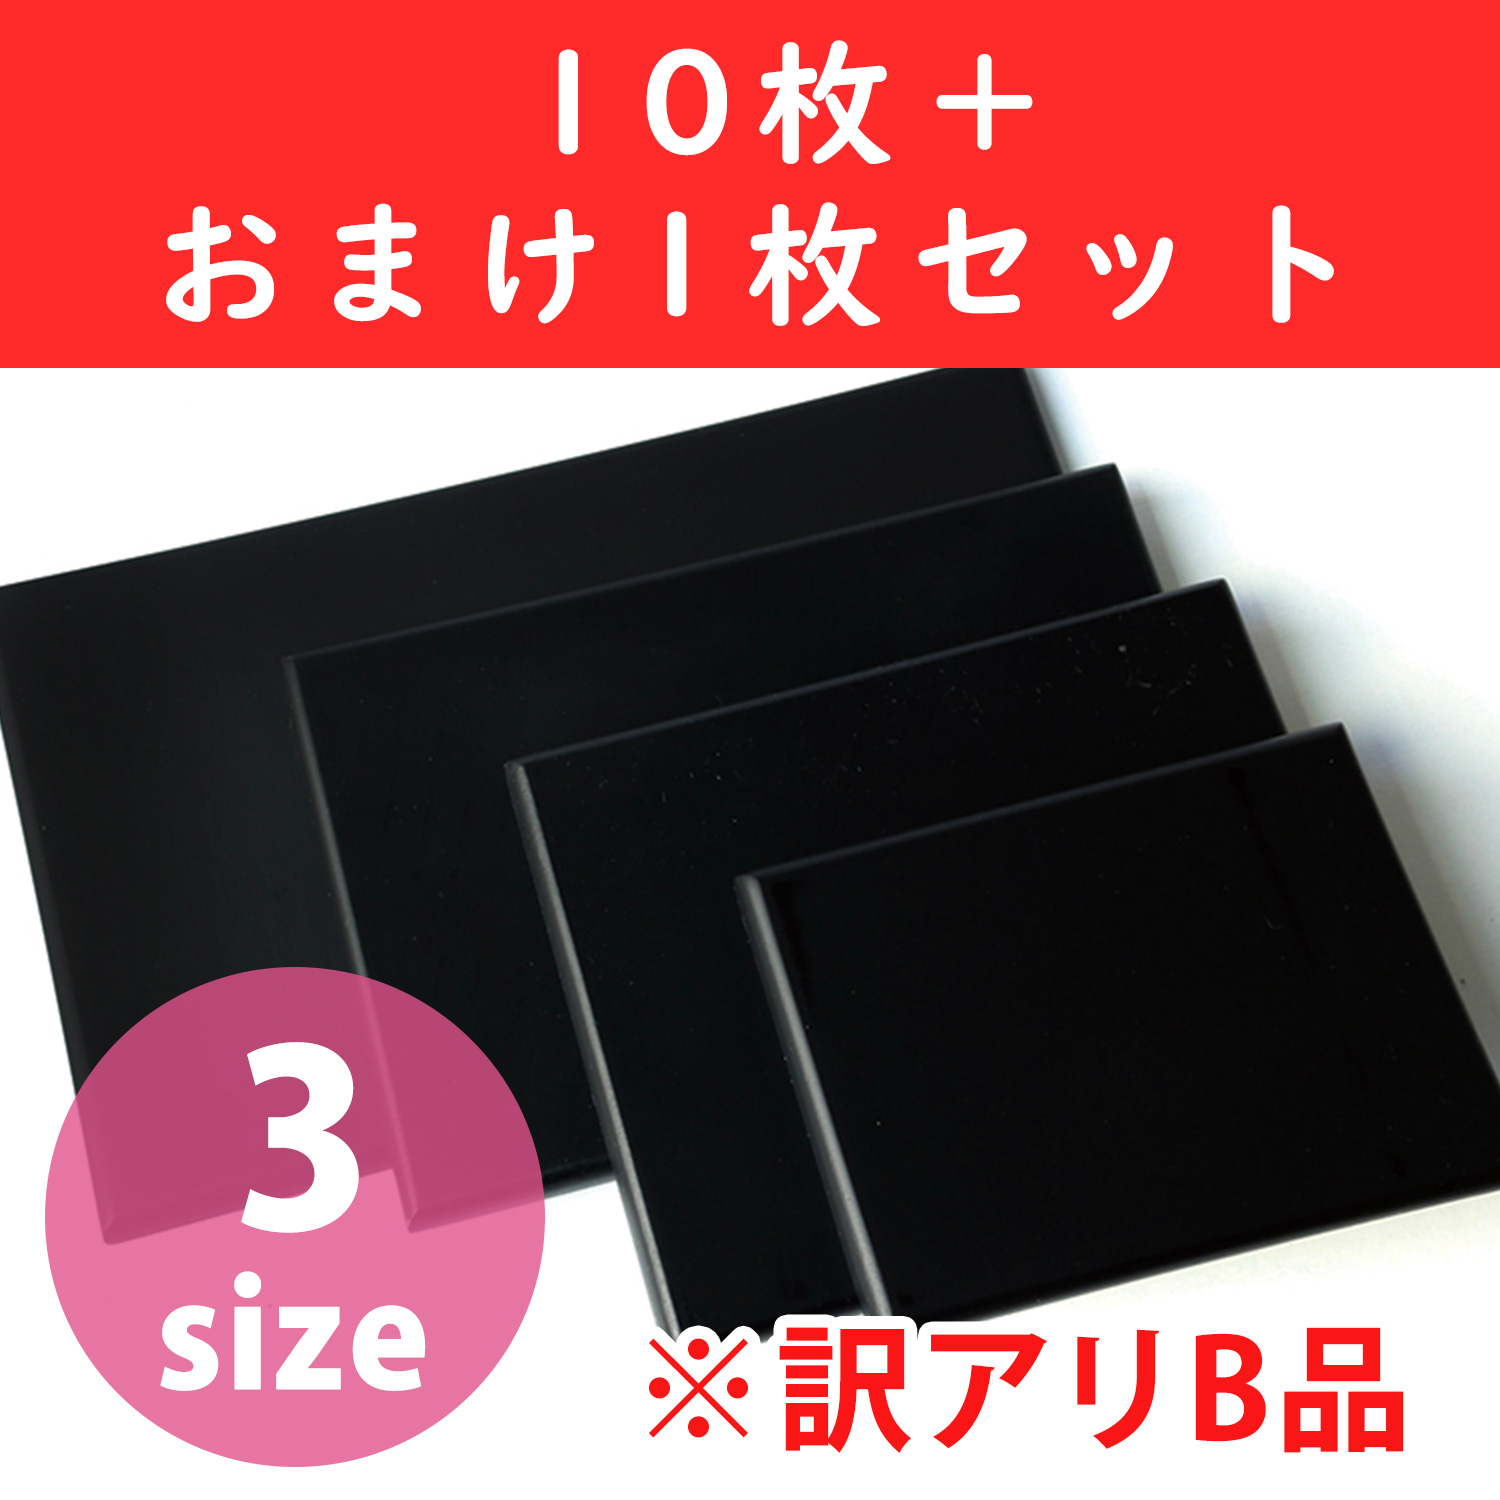 [B product/with translation] EM-B10SET Black stand matte 10 pcs + 1 bonus set (set)